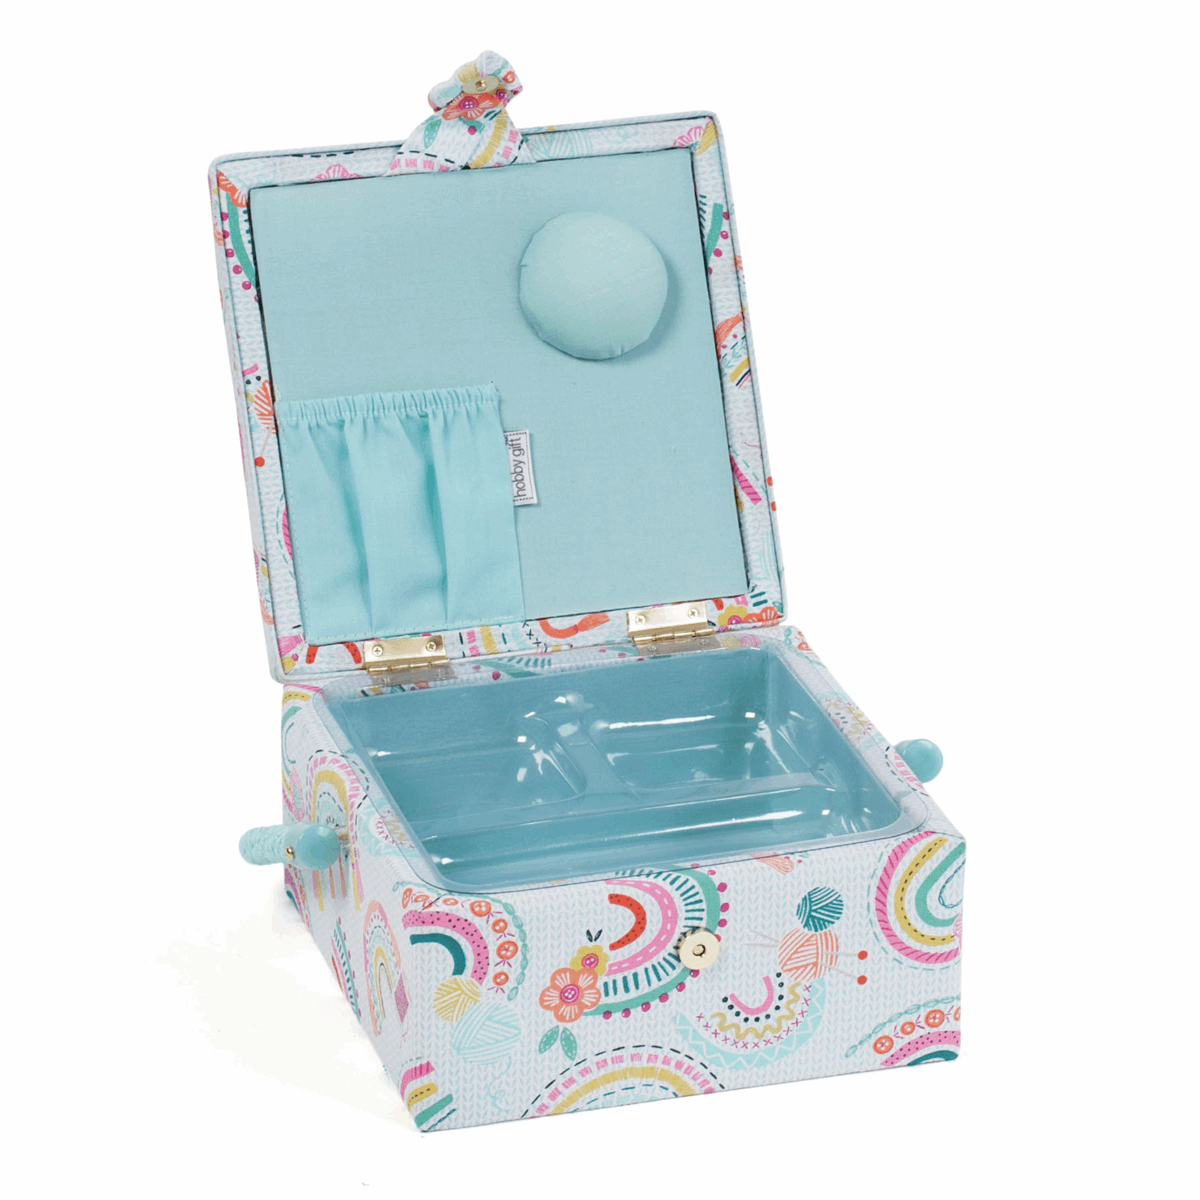 Rainbow Sewing Box - Small